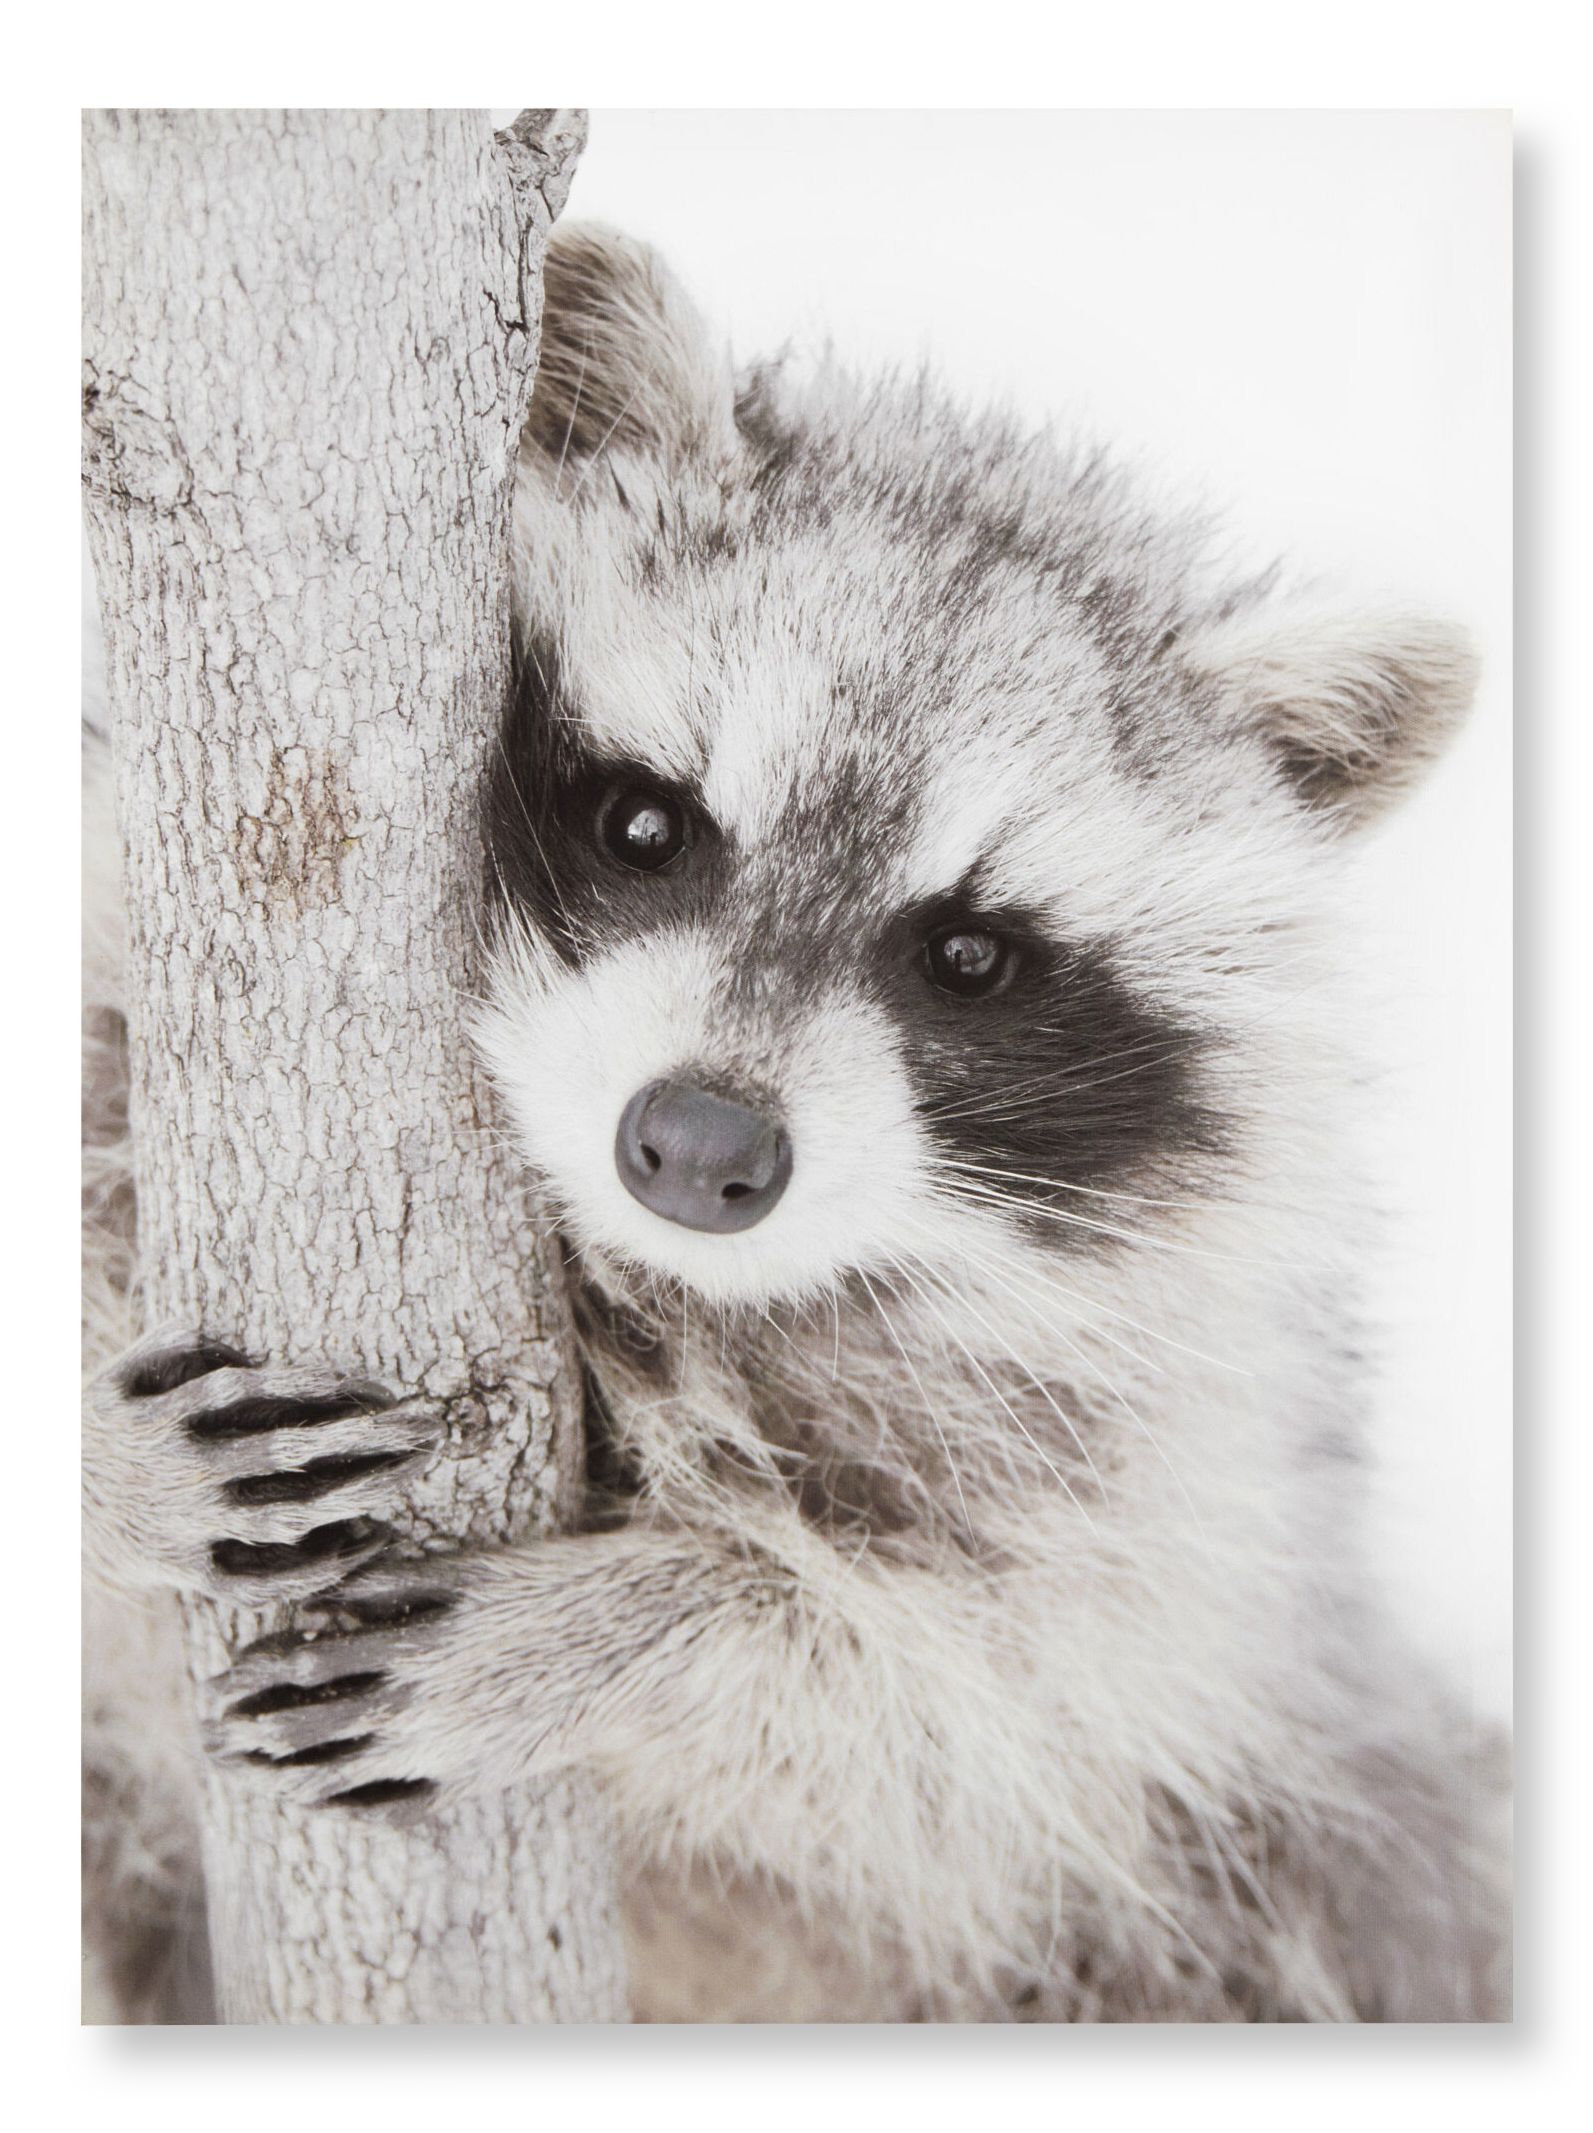 Raccoon Printed Canvas